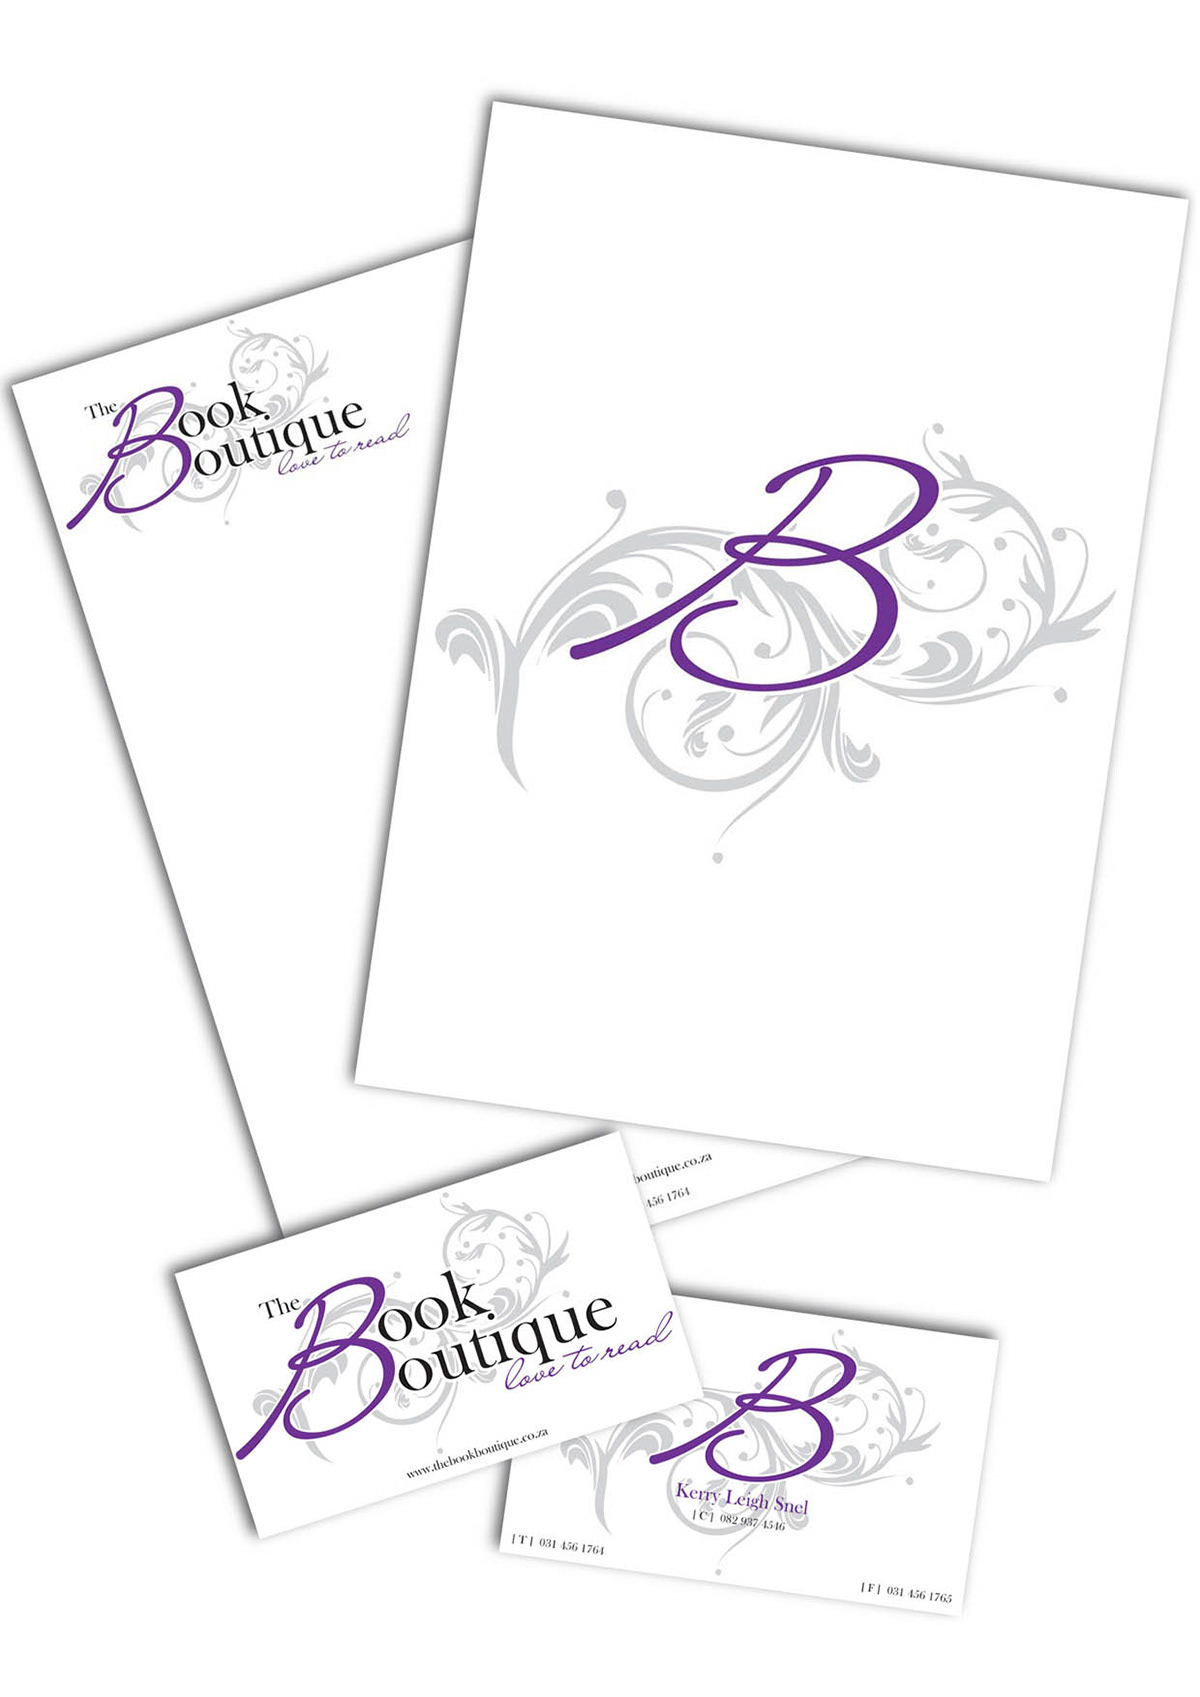 campaign clients logo design letterhead Business Cards creative material